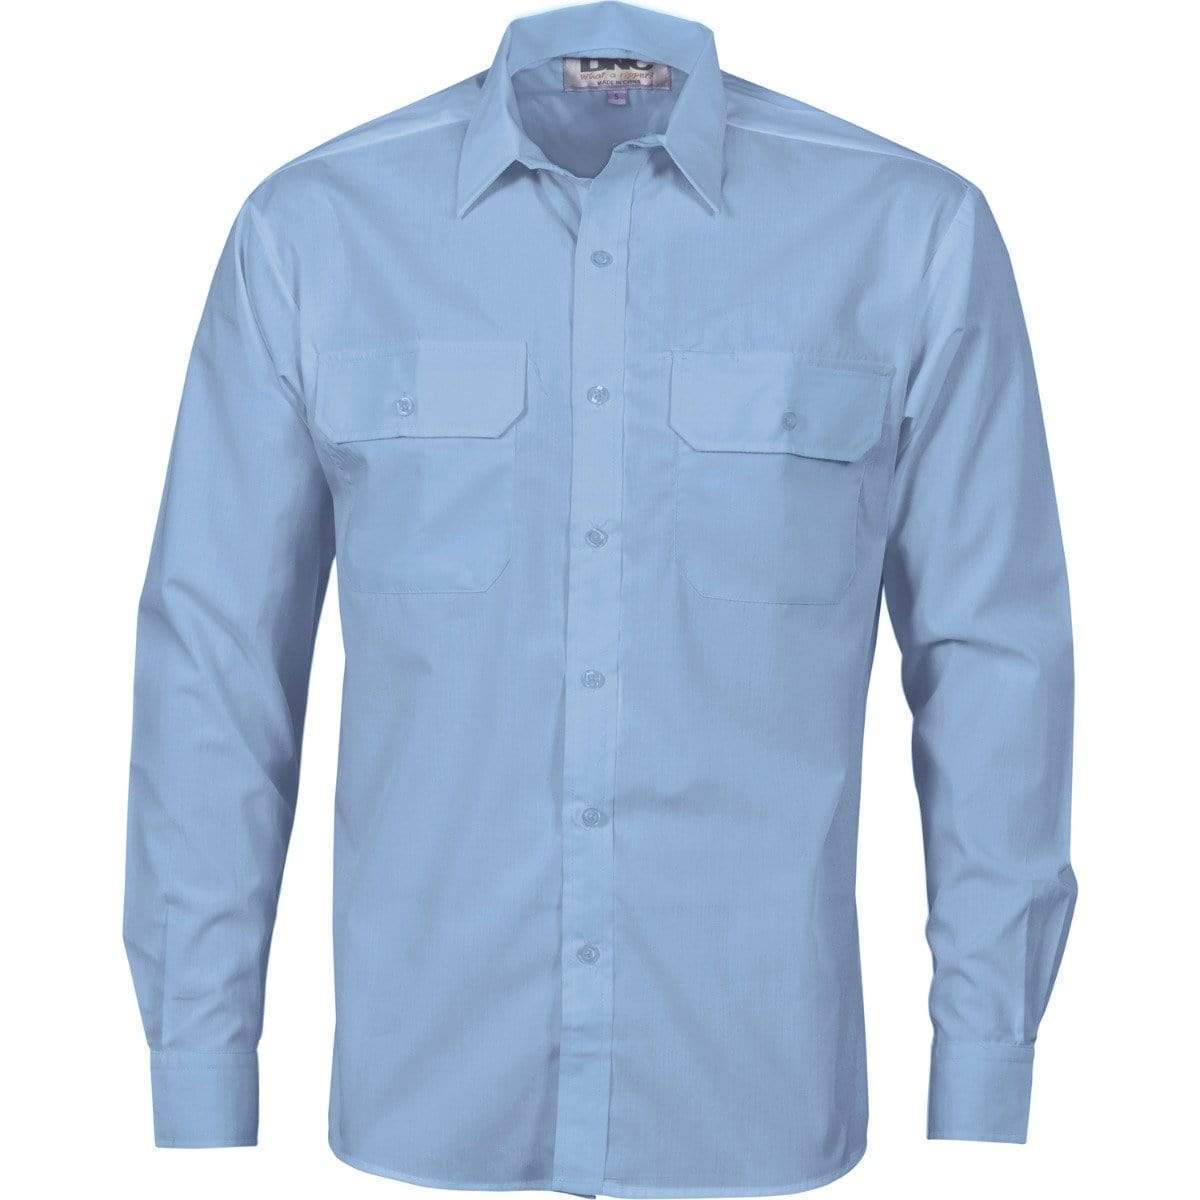 Dnc Workwear Polyester Cotton Long Sleeve Work Shirt - 3212 Work Wear DNC Workwear Sky XS 